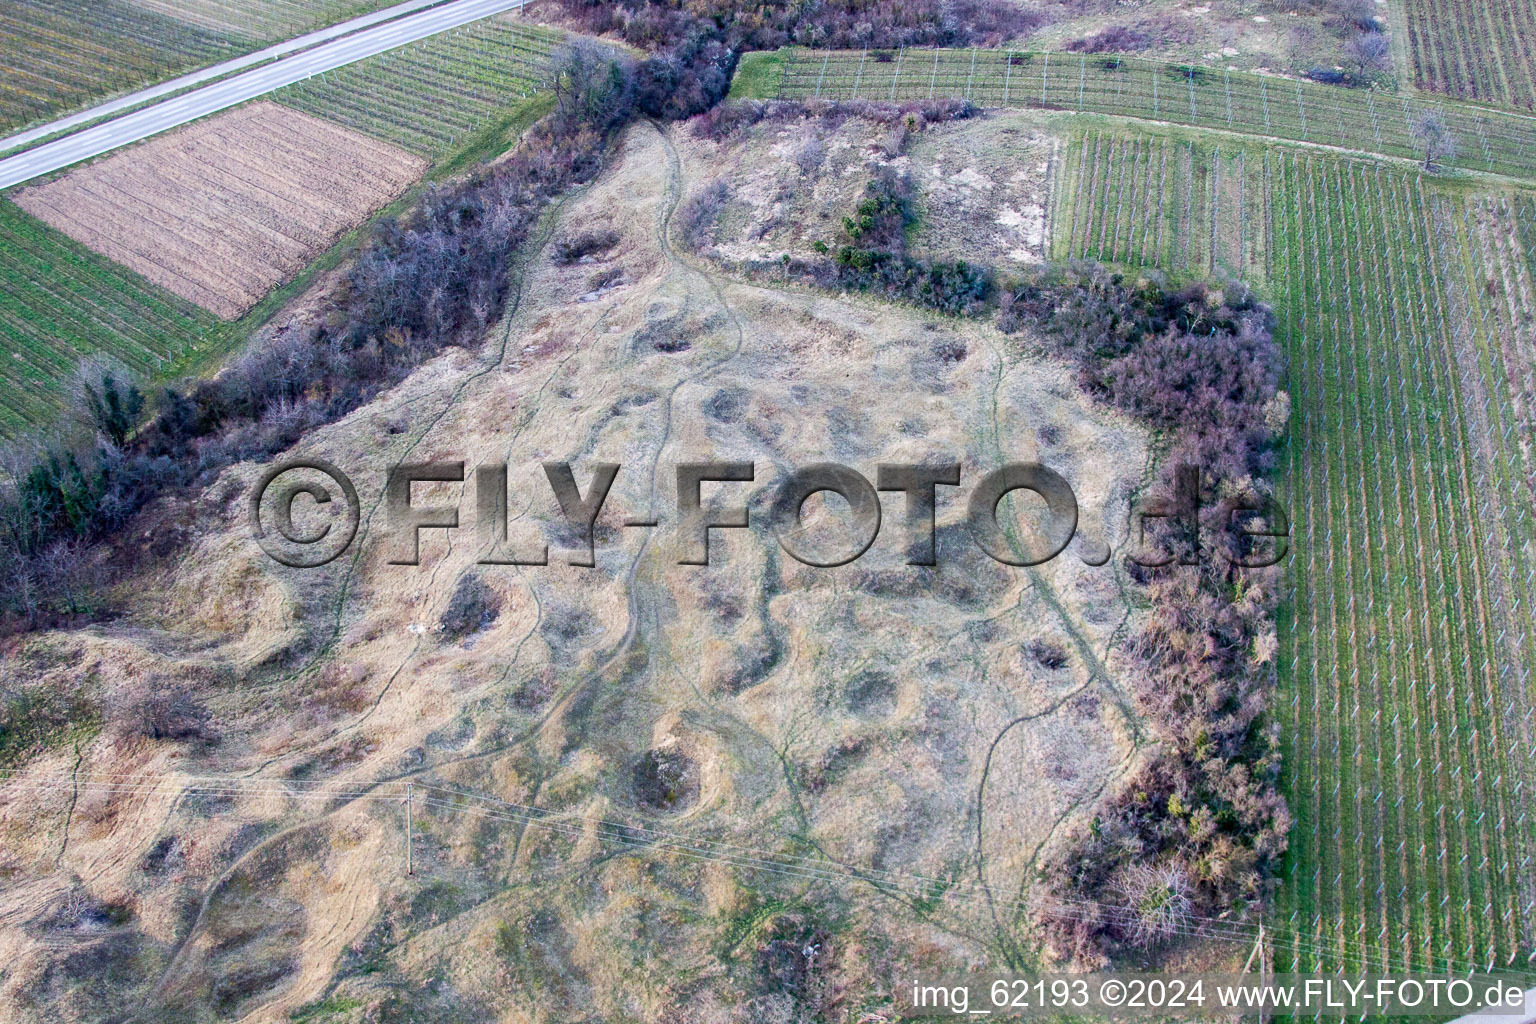 Drone recording of Small kalmit in Ilbesheim bei Landau in der Pfalz in the state Rhineland-Palatinate, Germany